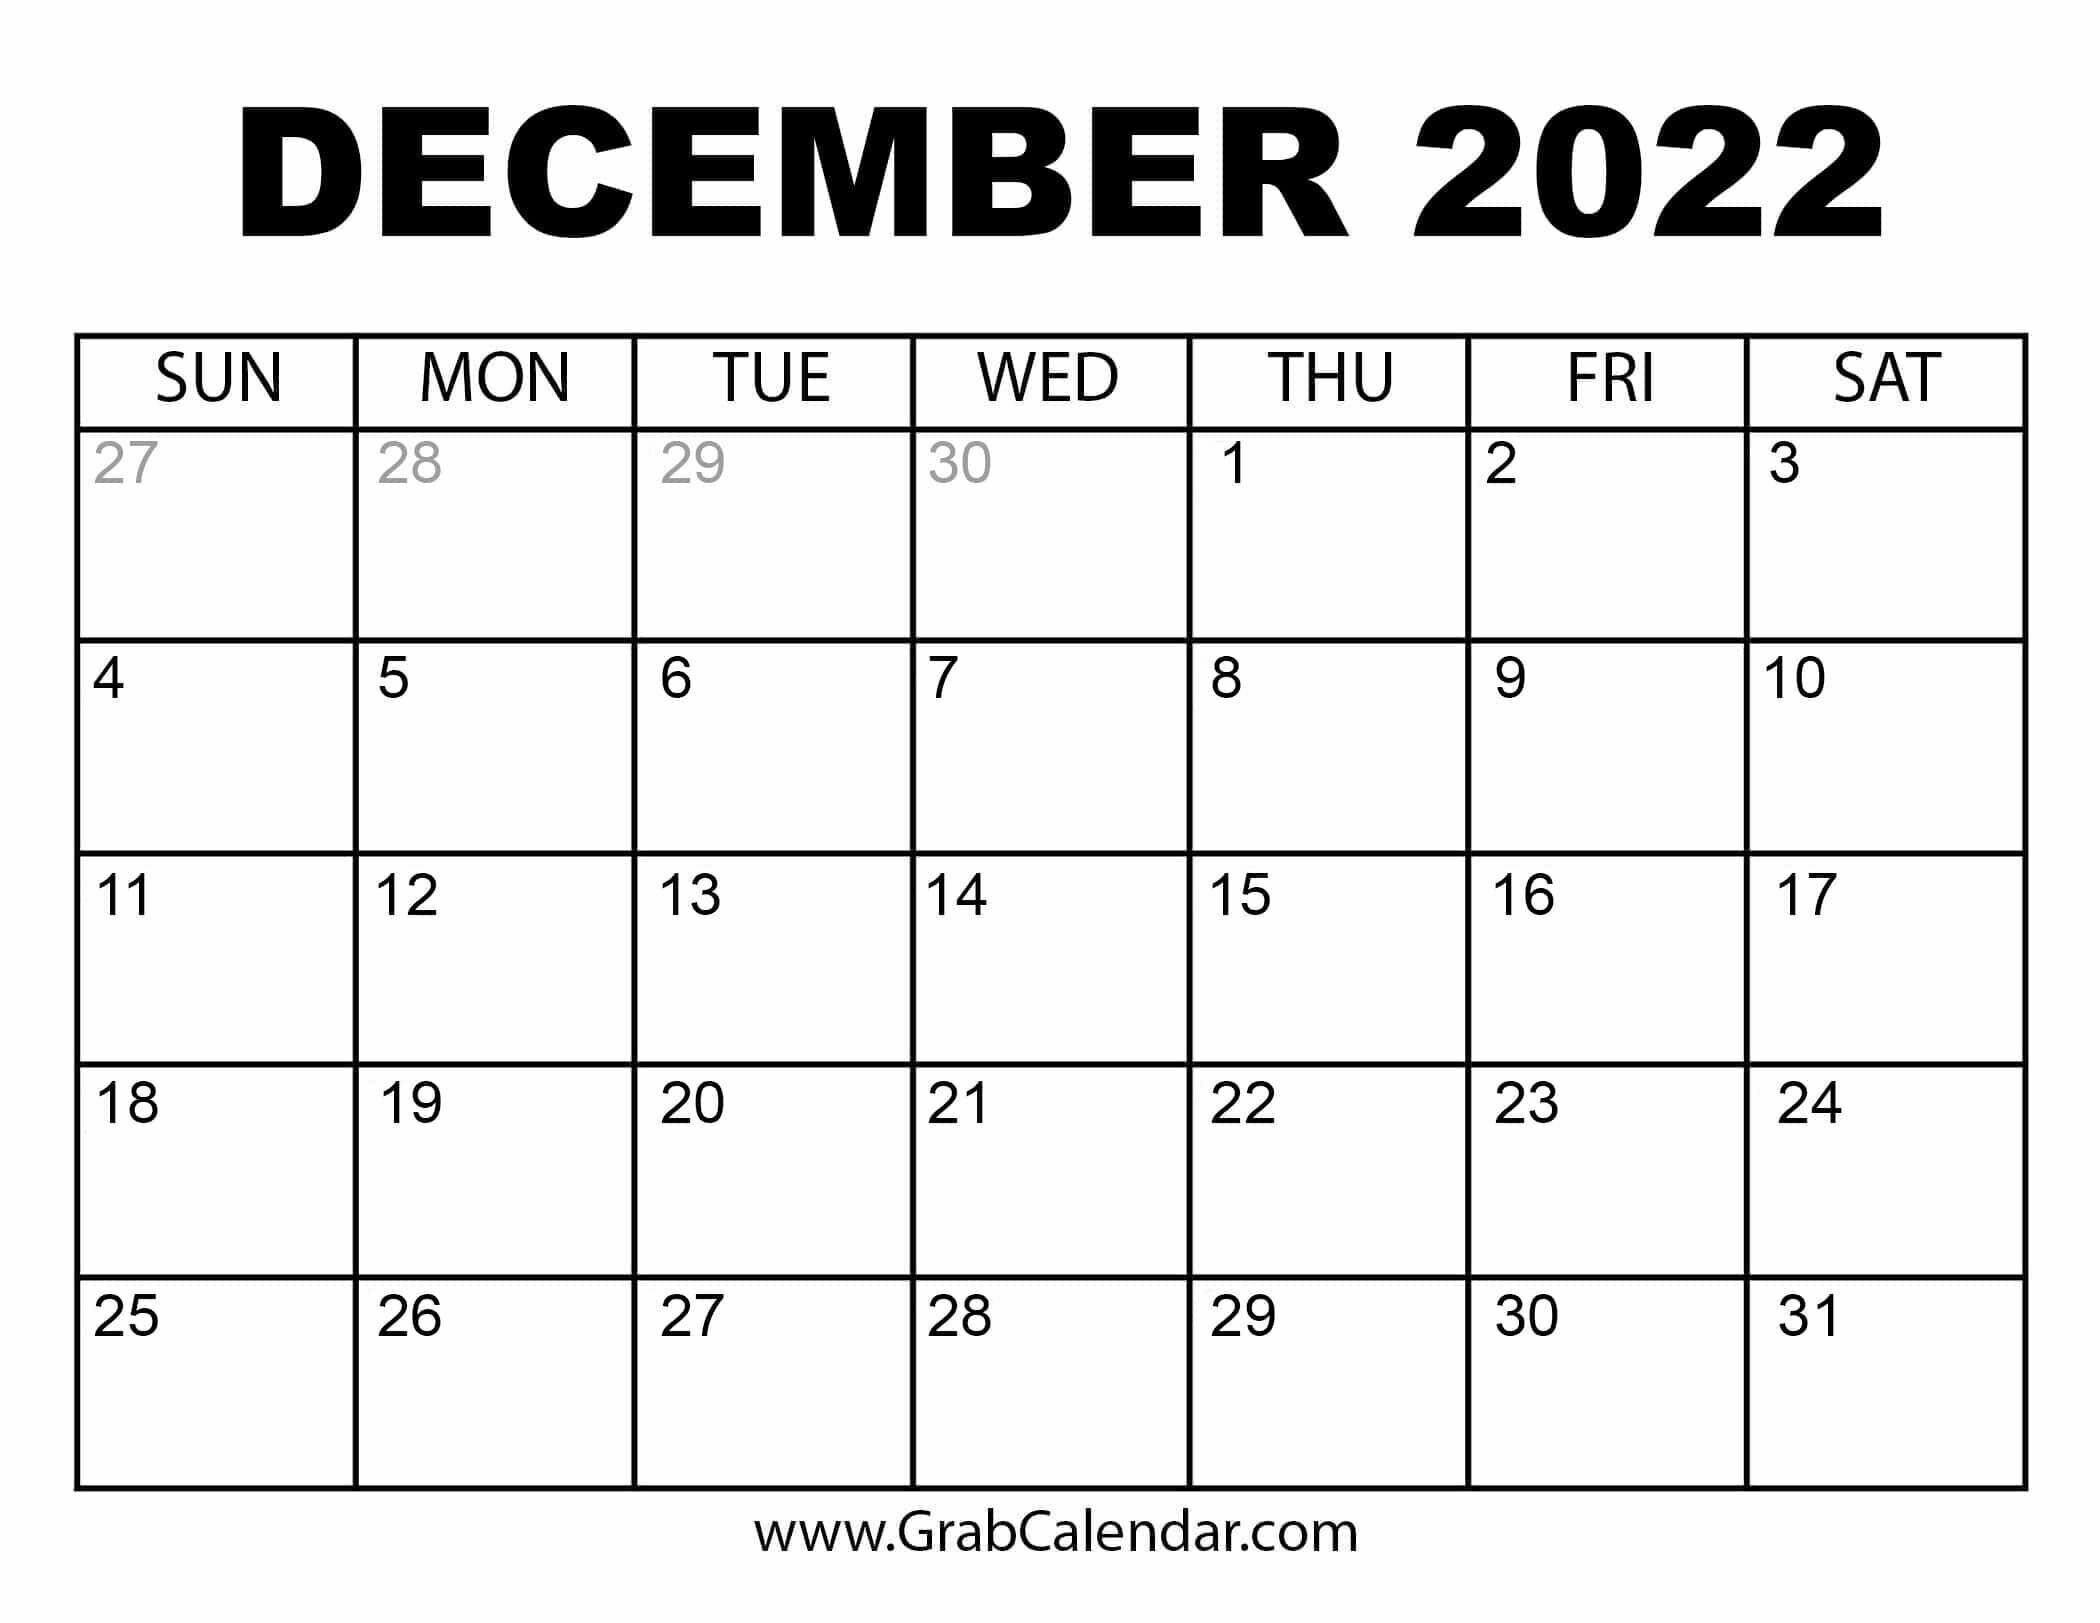 Avatar: December 2022 Calendar